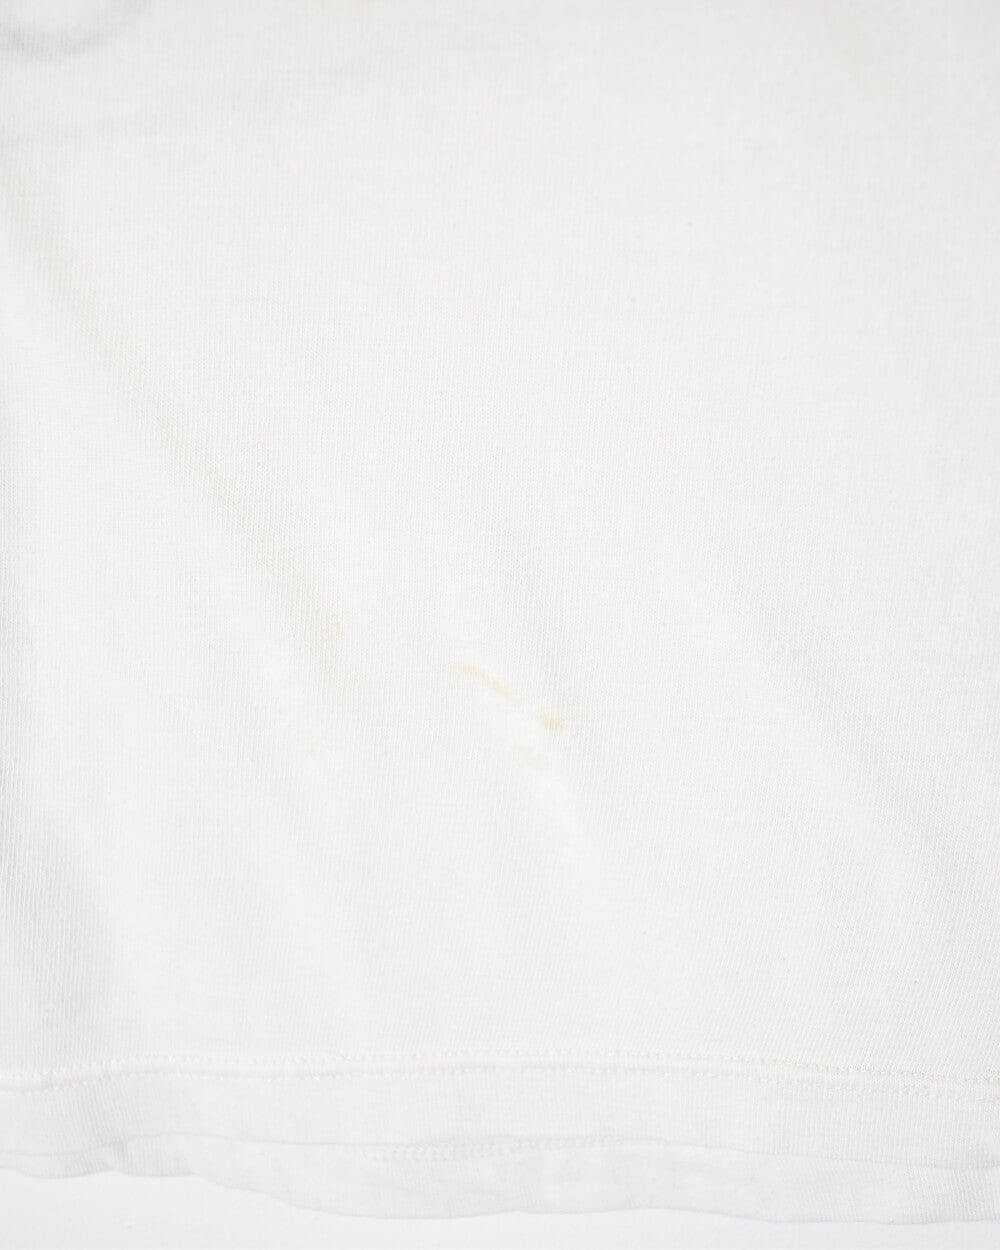 White Barcelona Olympics 92 T-Shirt - Small